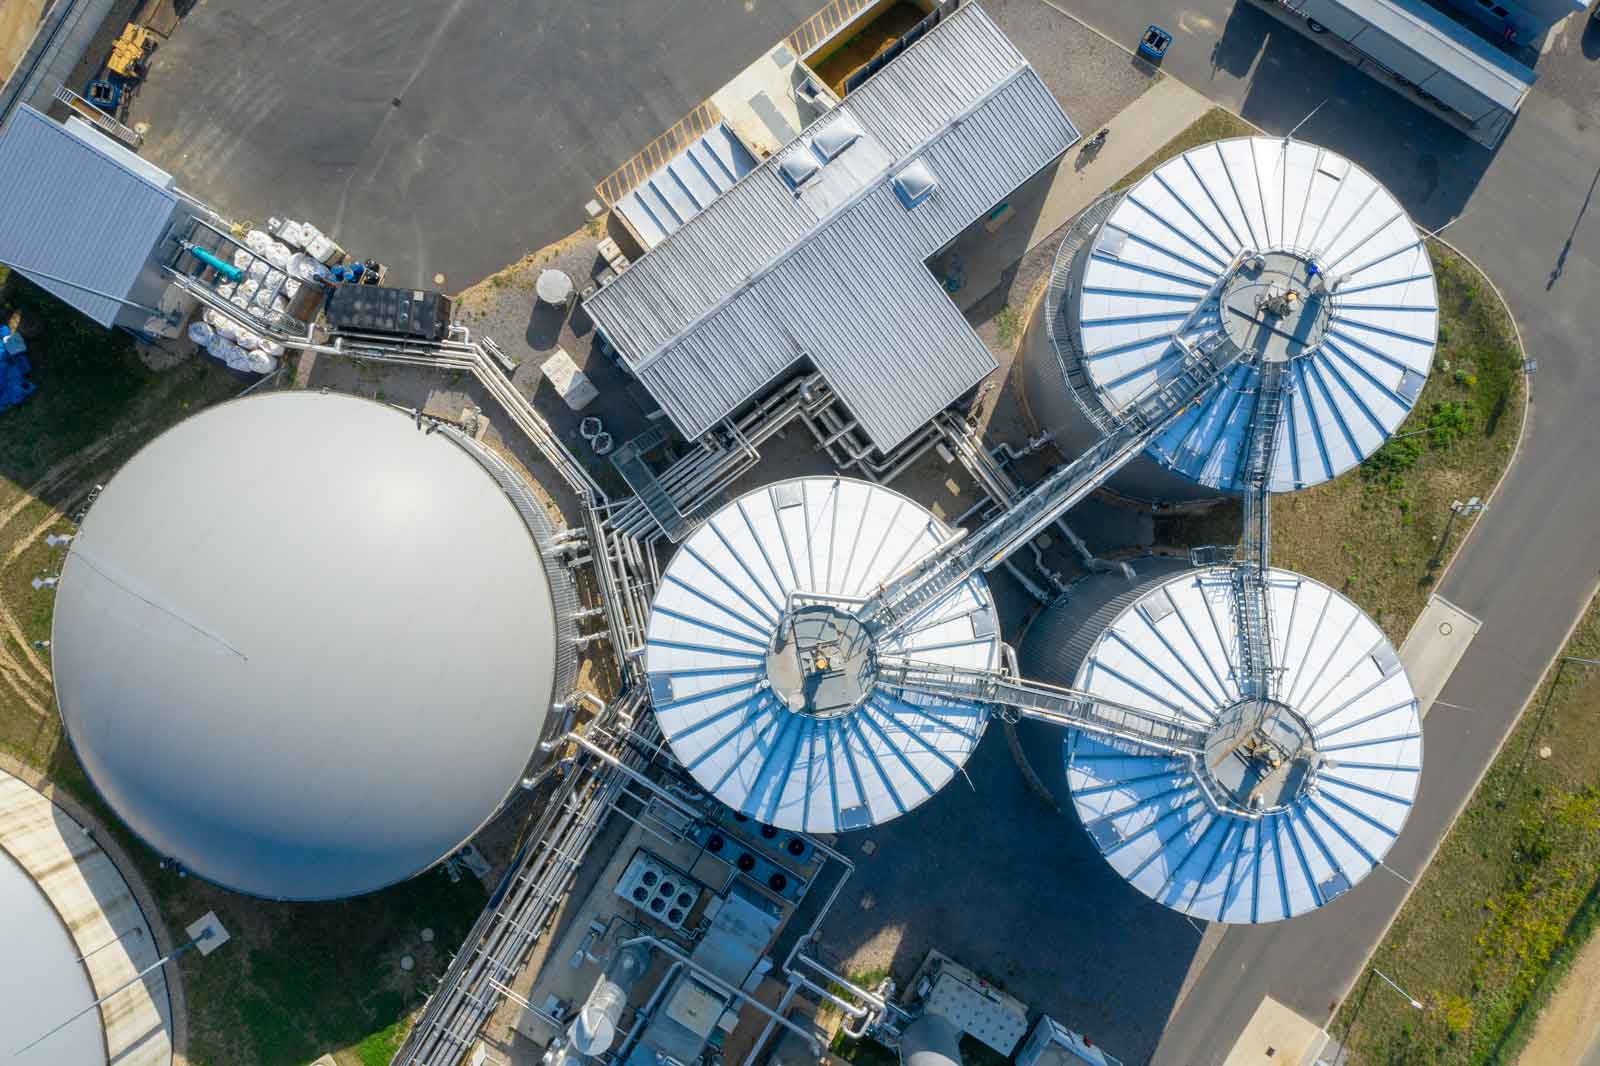 Biogas plant | Discover renewables at RWE